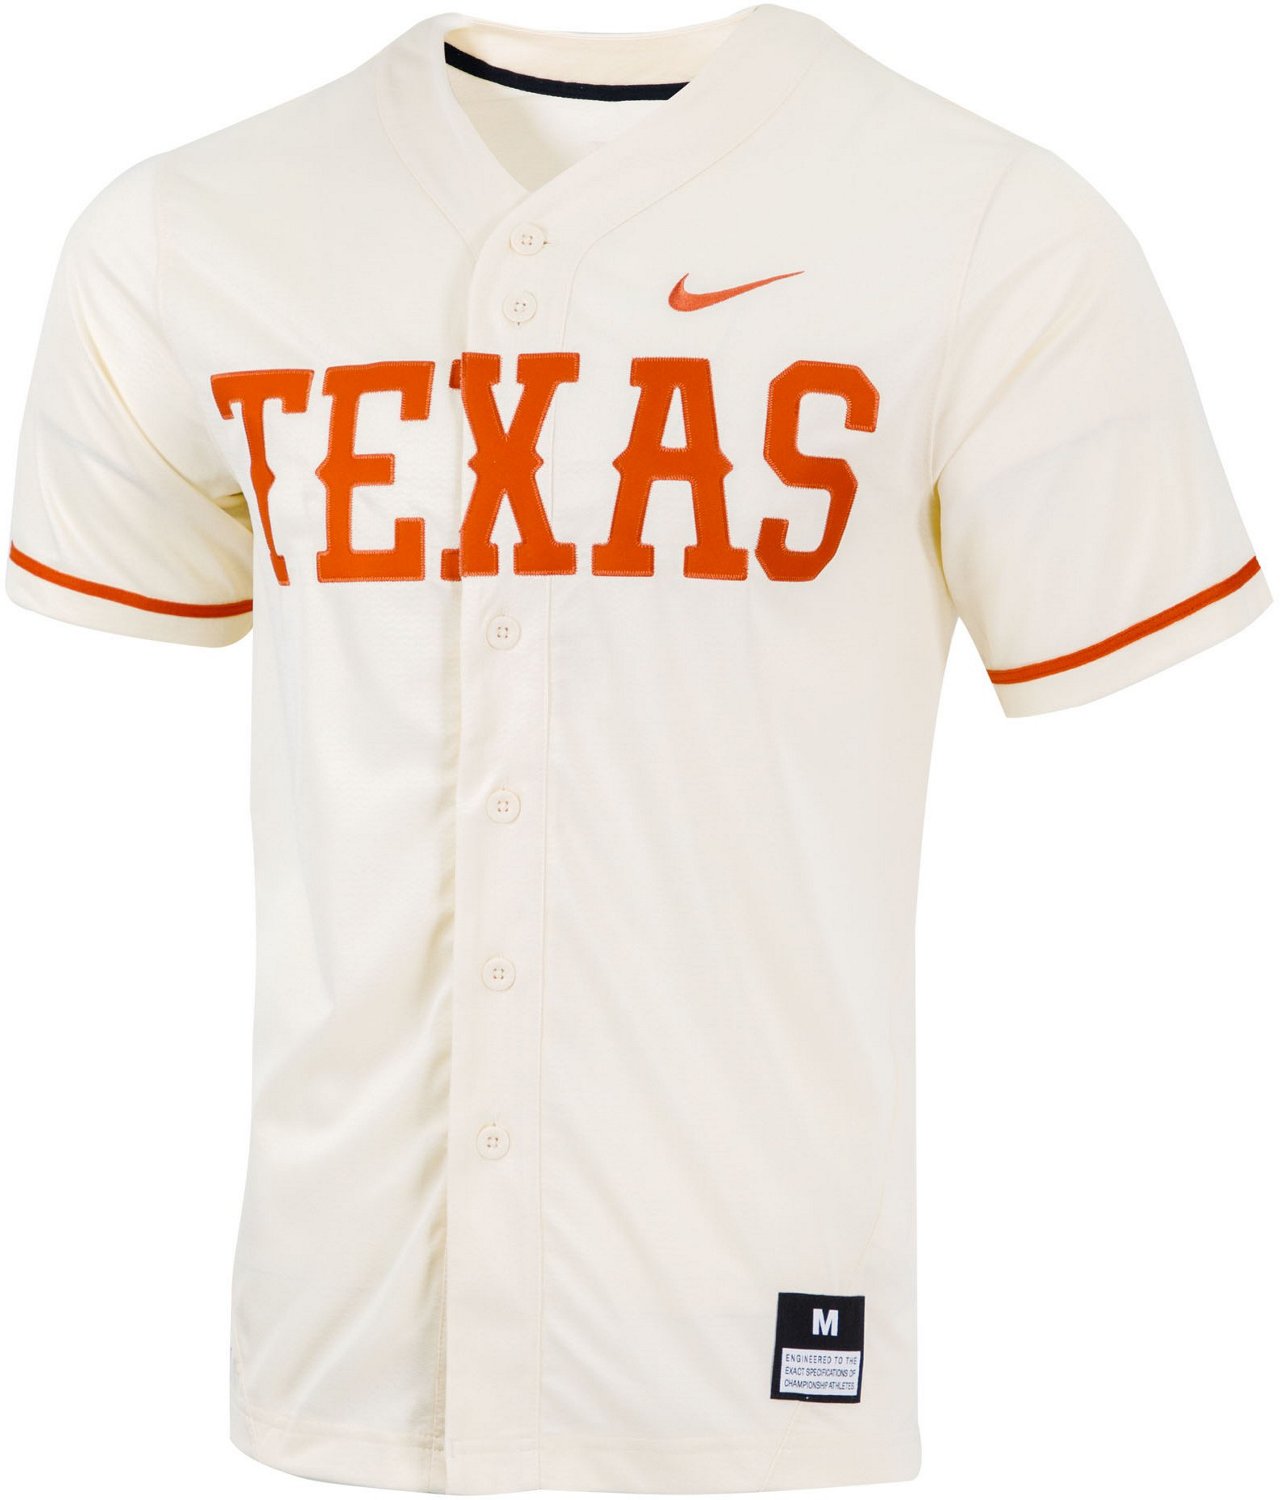 Baseball Jerseys for sale in Camp Hulen, Texas